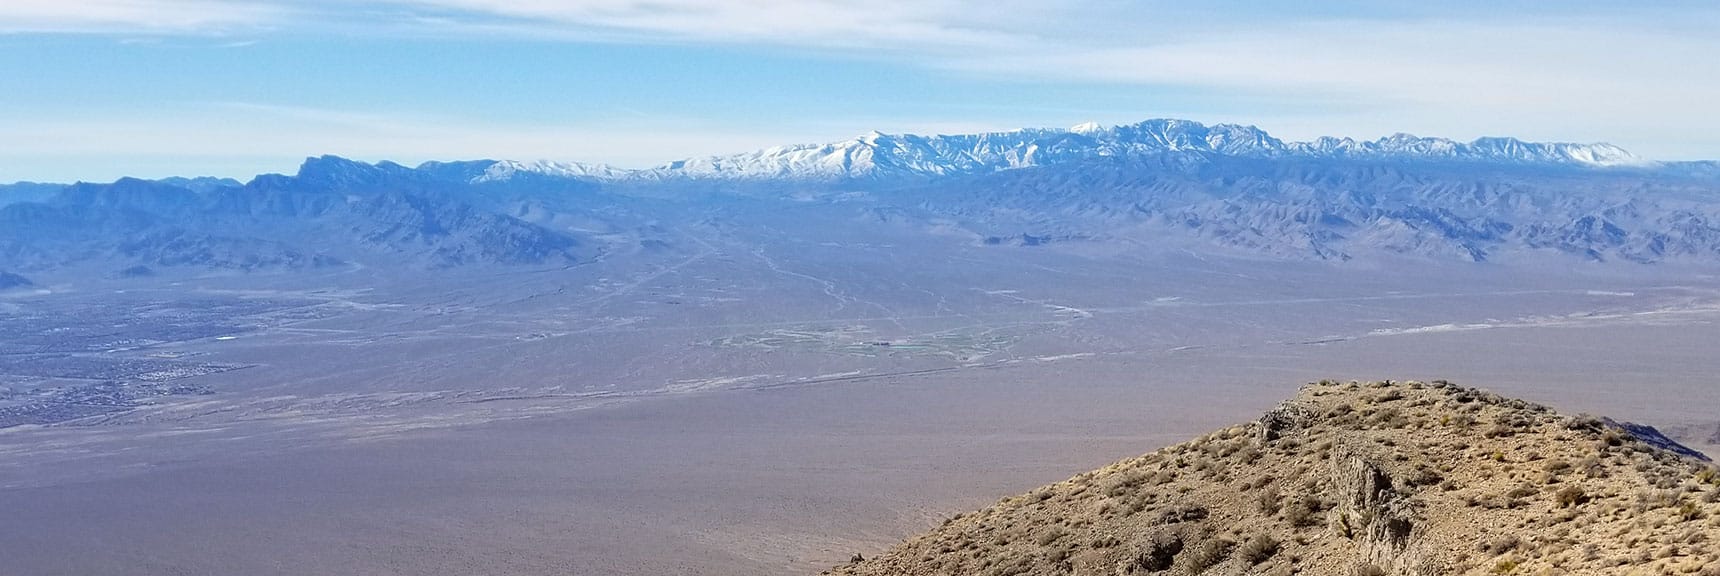 Red Rock Park, La Madre Mt. and Mt. Charleston Wilderness Viewed from Gass Peak Summit, Nevada